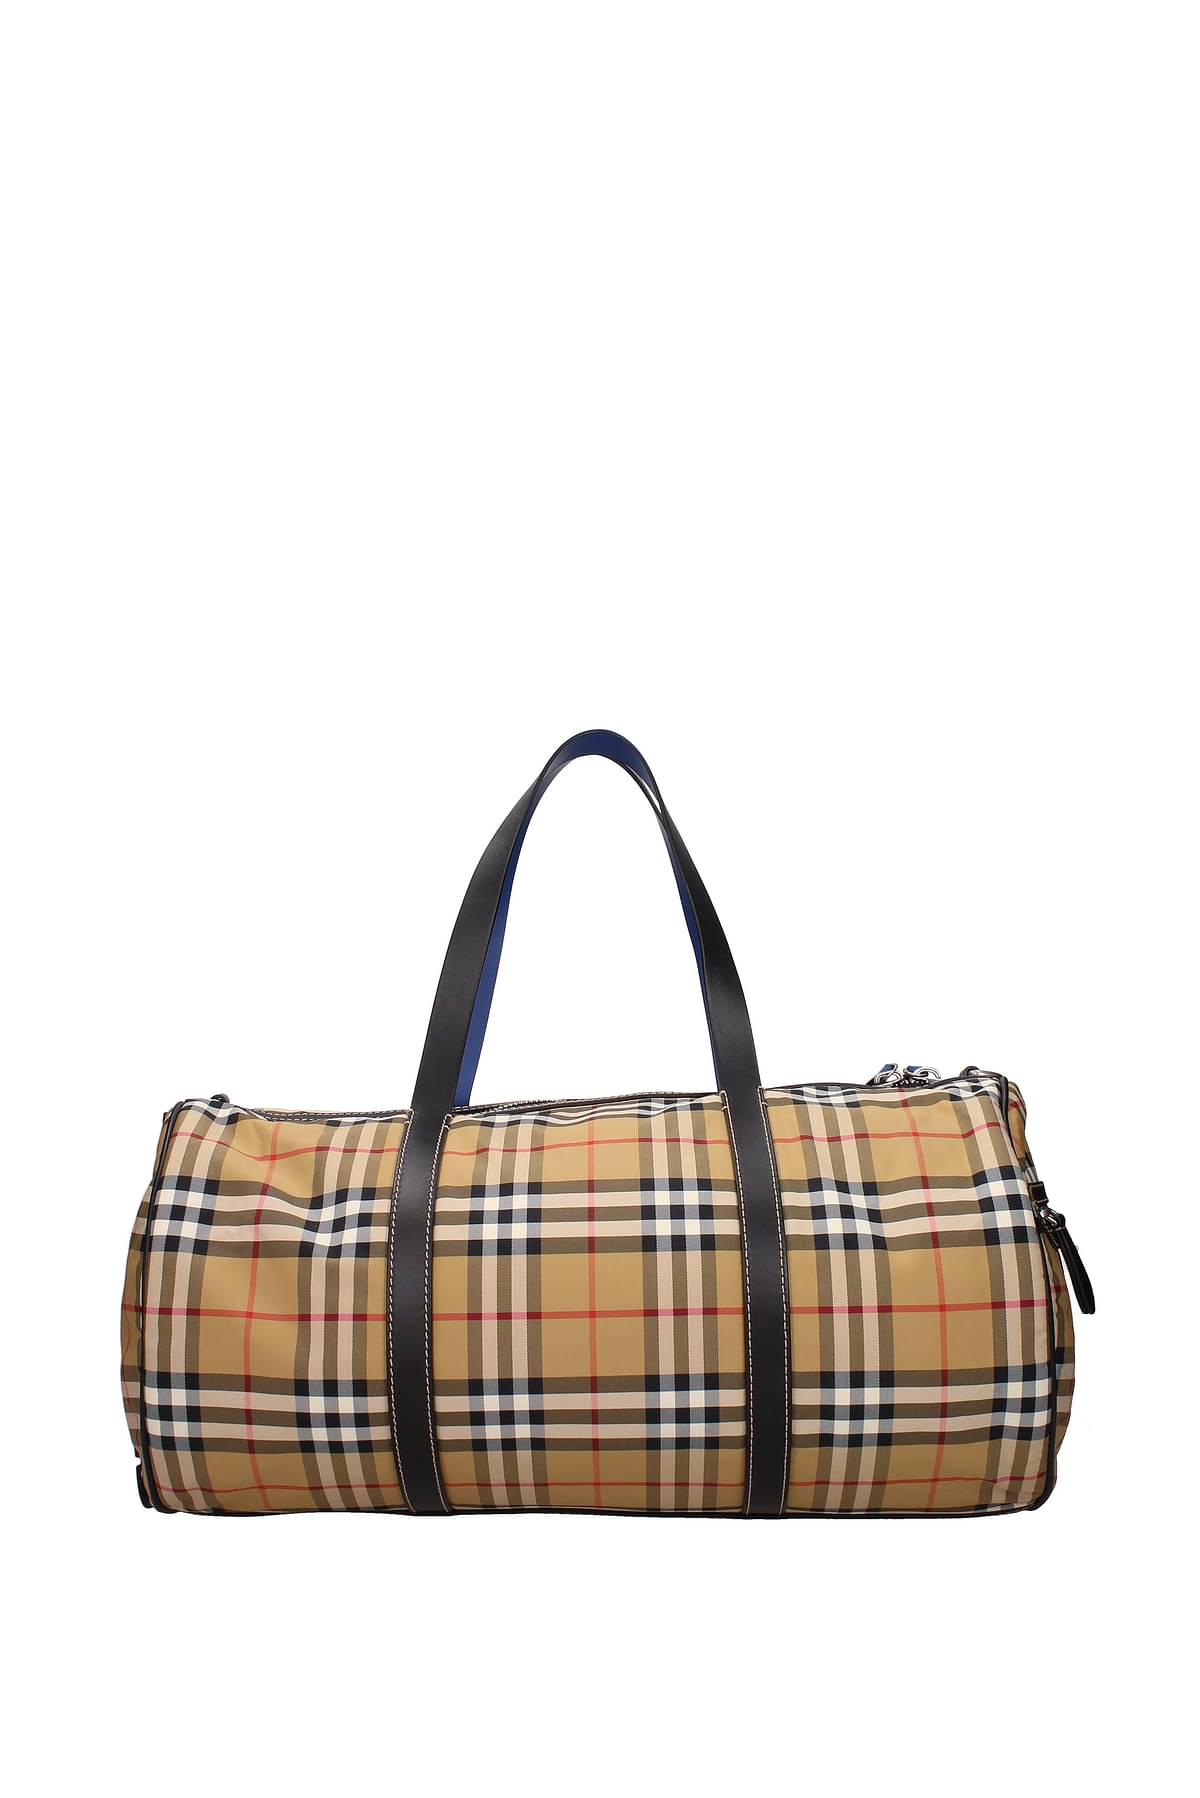 Burberry Travel Bags Men 8005522 Fabric 563,5€